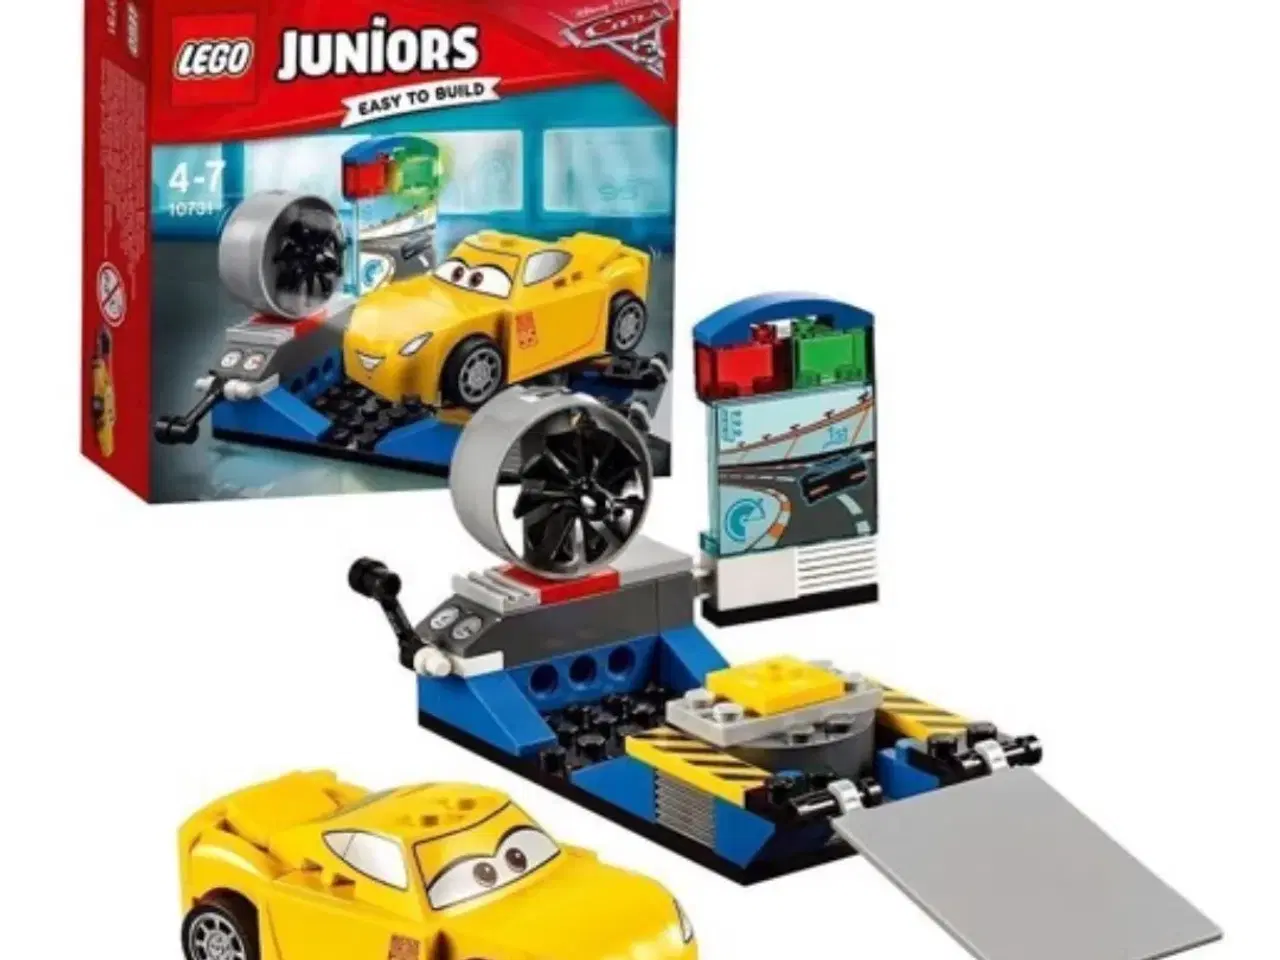 Billede 1 - Lego juniors cars bil